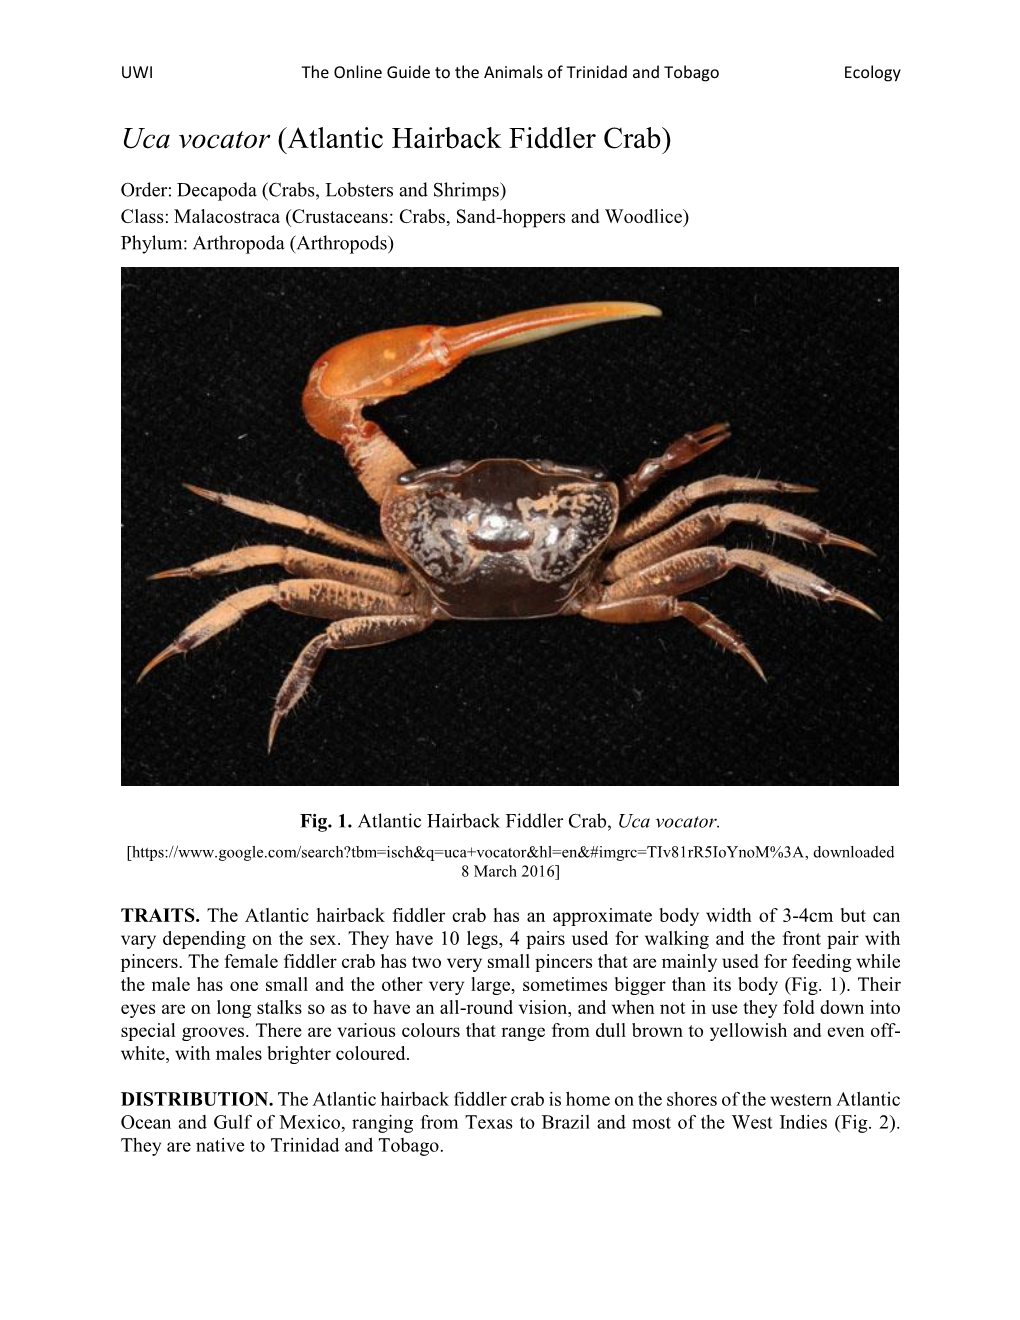 Uca Vocator (Atlantic Hairback Fiddler Crab)